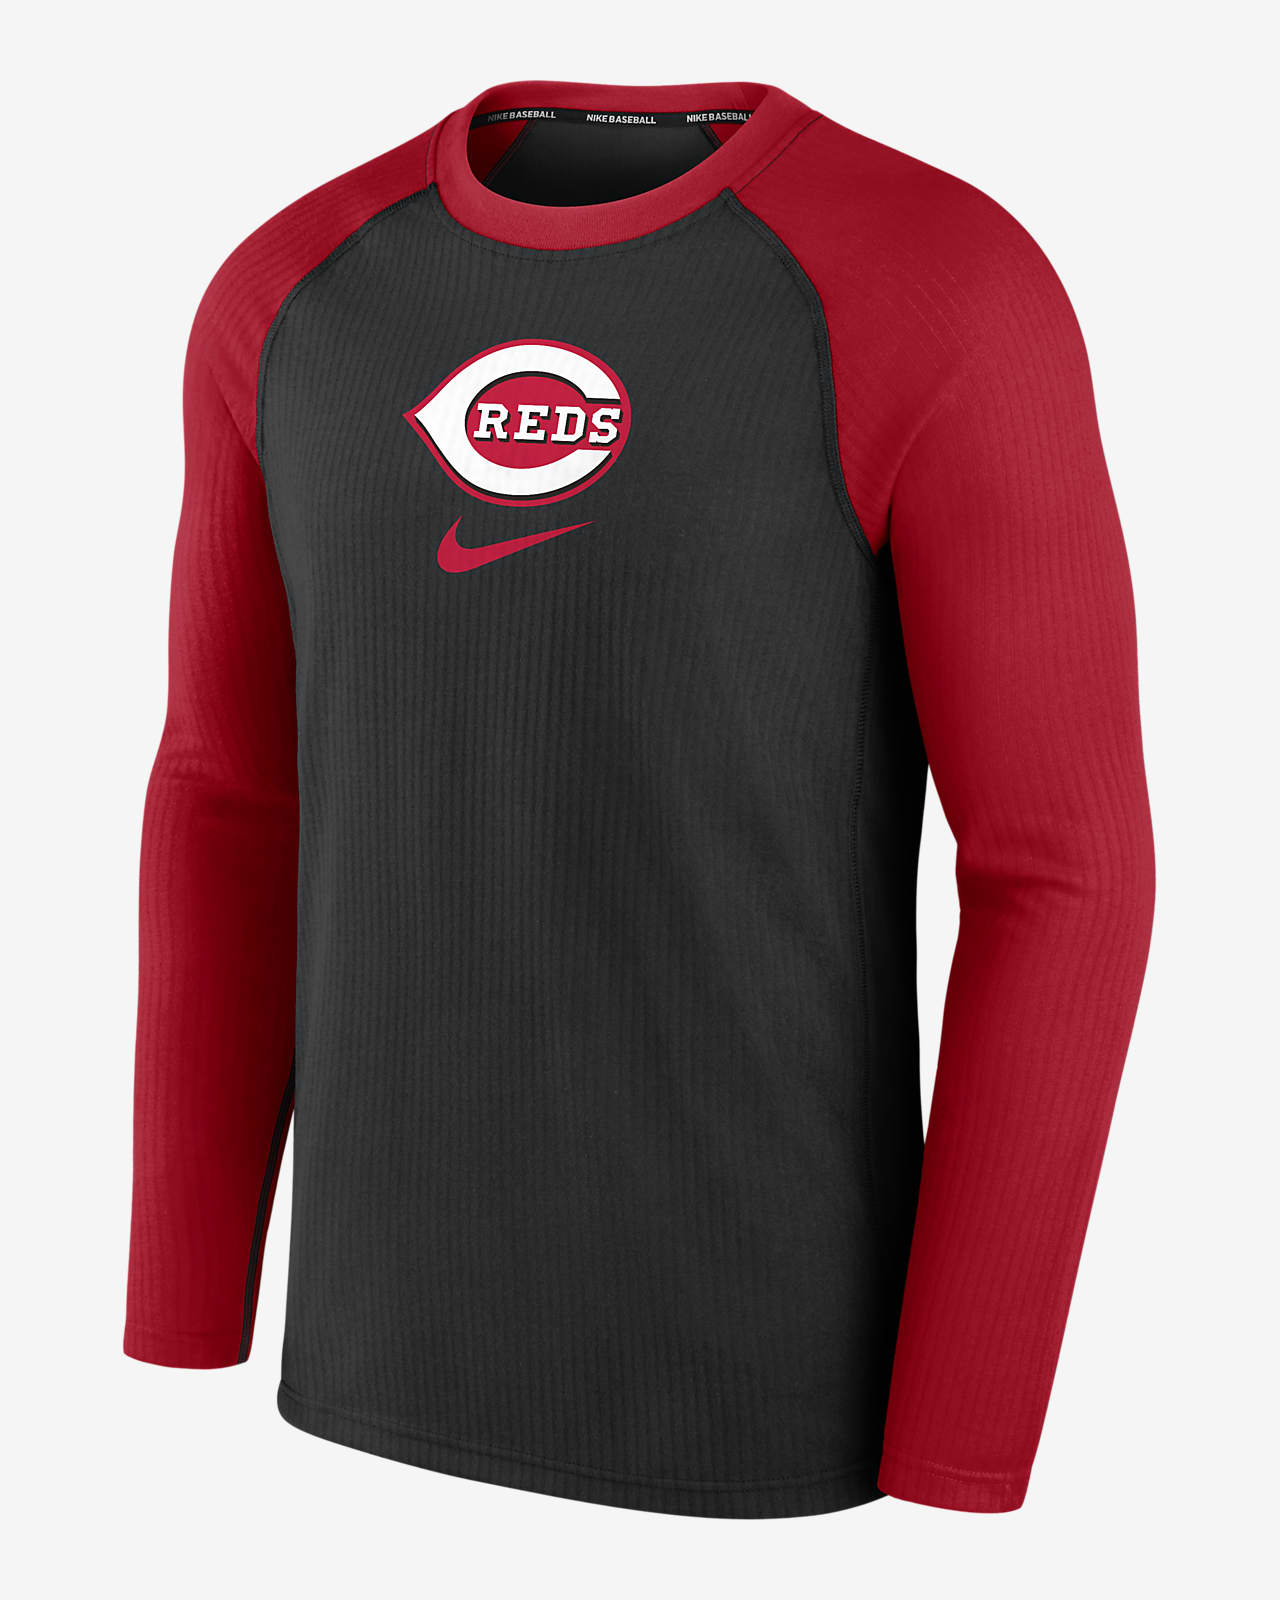 Cincinnati Reds Baseball Nike Shirt S. Boys